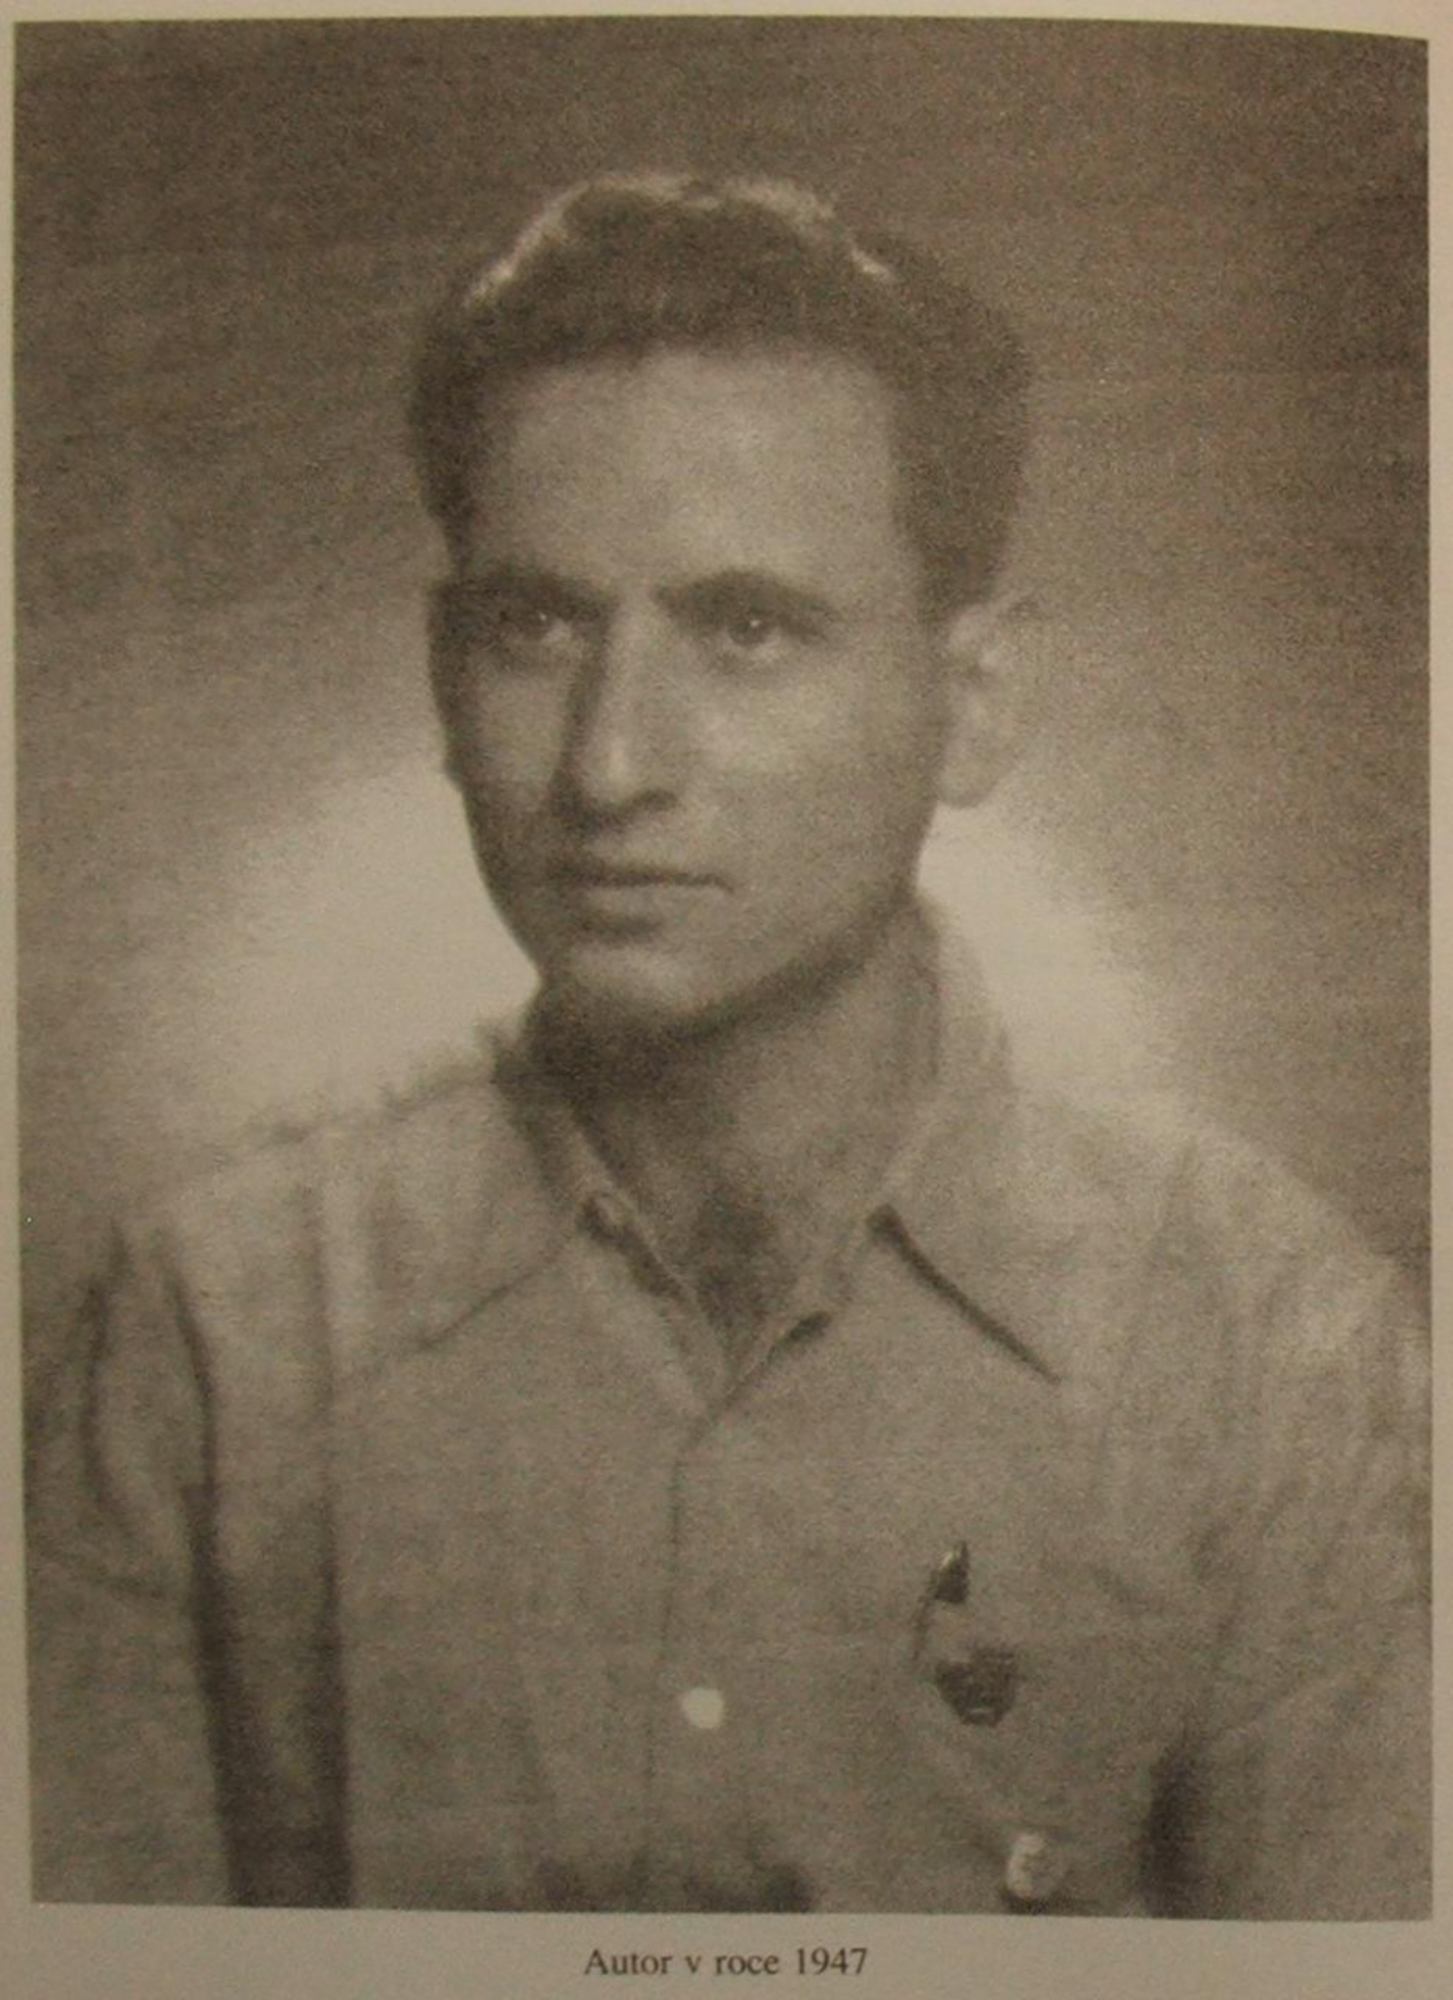 Zwi Batscha in 1947